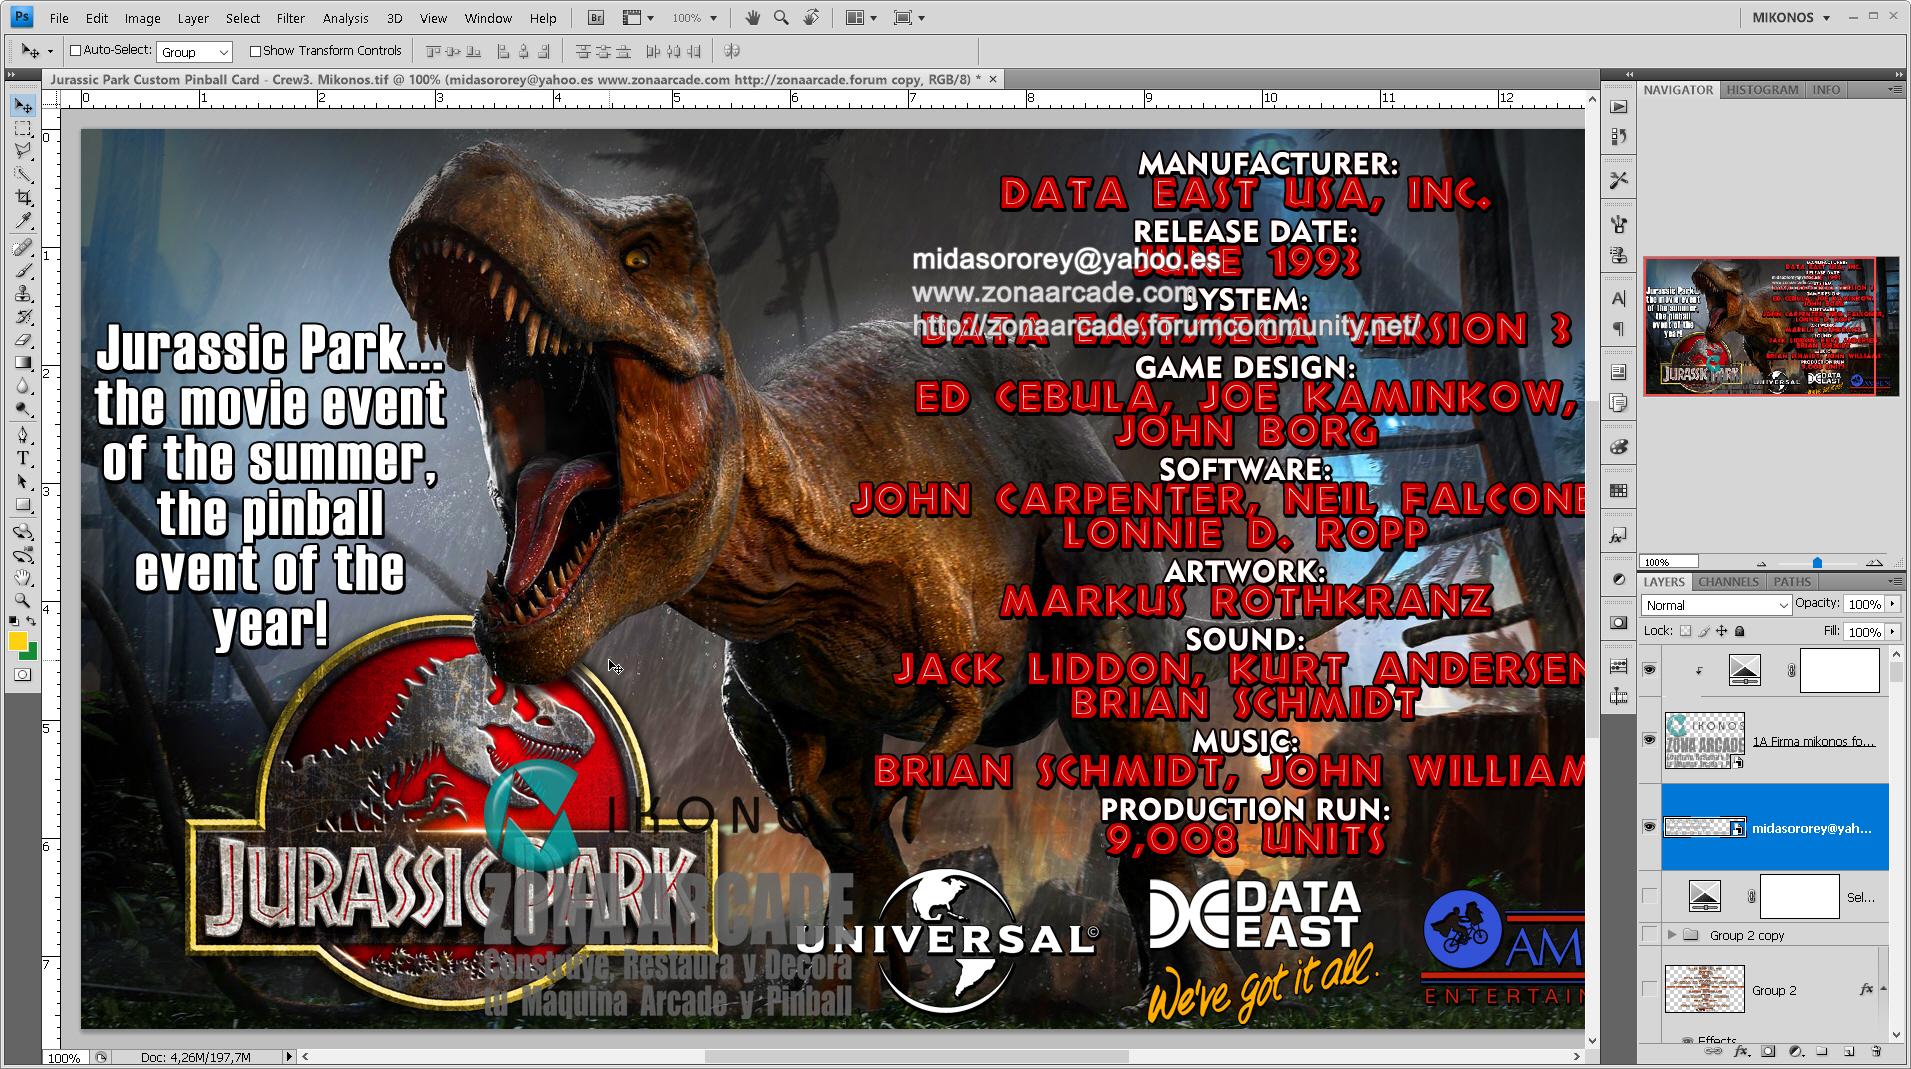 Jurassic-Park-Custom-Pinball-Card-Crew2-Mikonos2